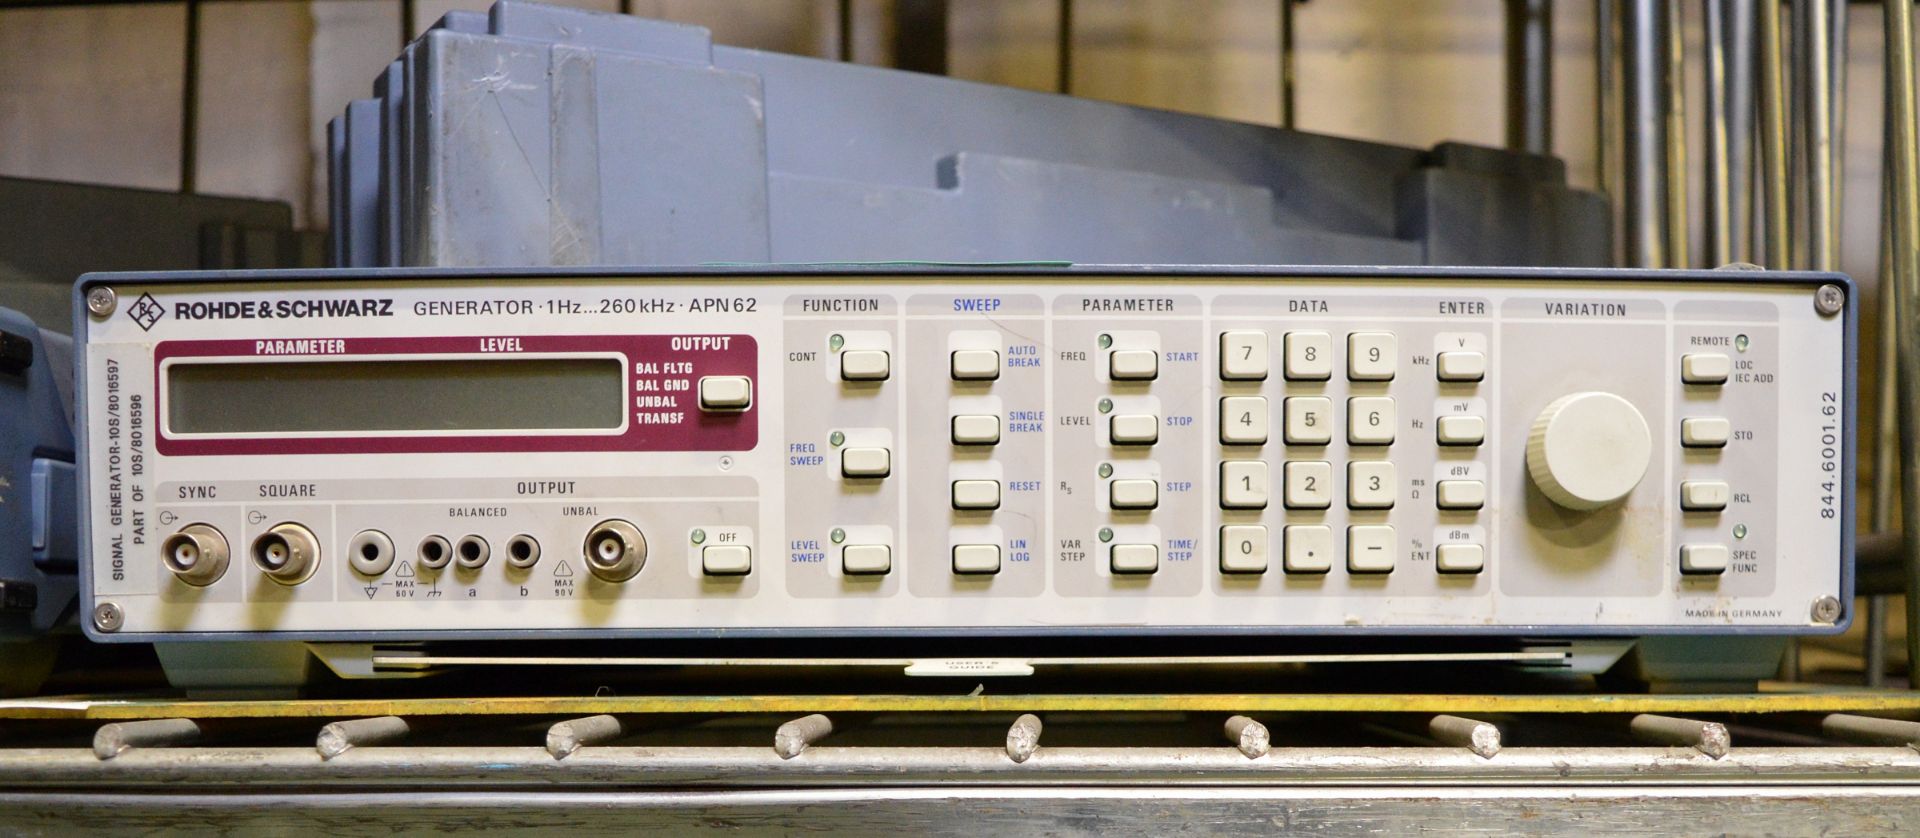 Rohde & Schwarz Signal Generator 1 Hz -260 KHz - APN 62 - Image 2 of 2